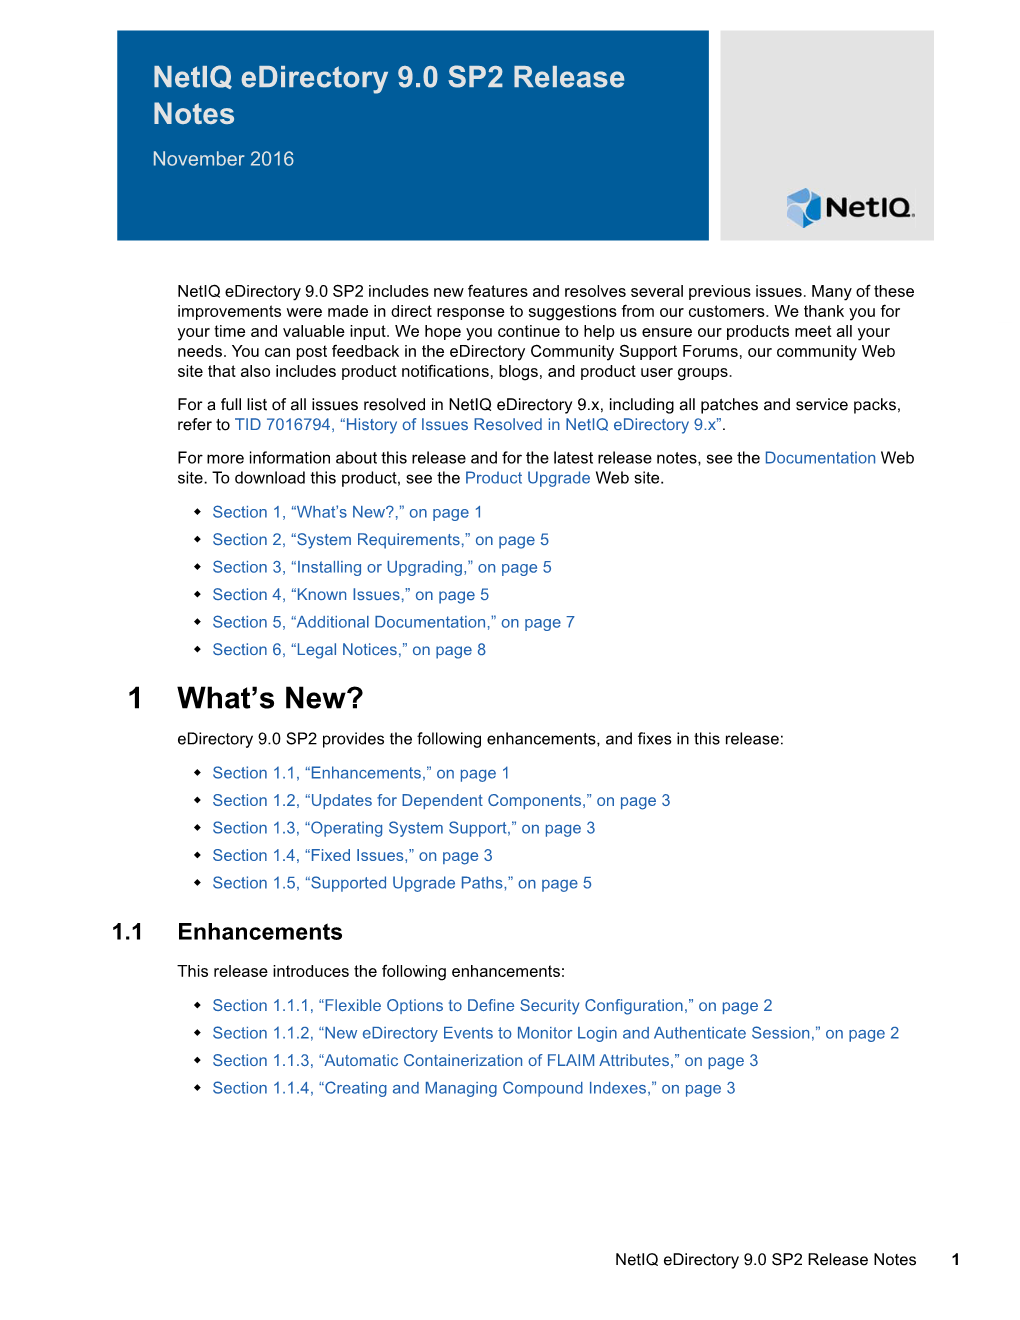 Netiq Edirectory 9.0 SP2 Release Notes November 2016